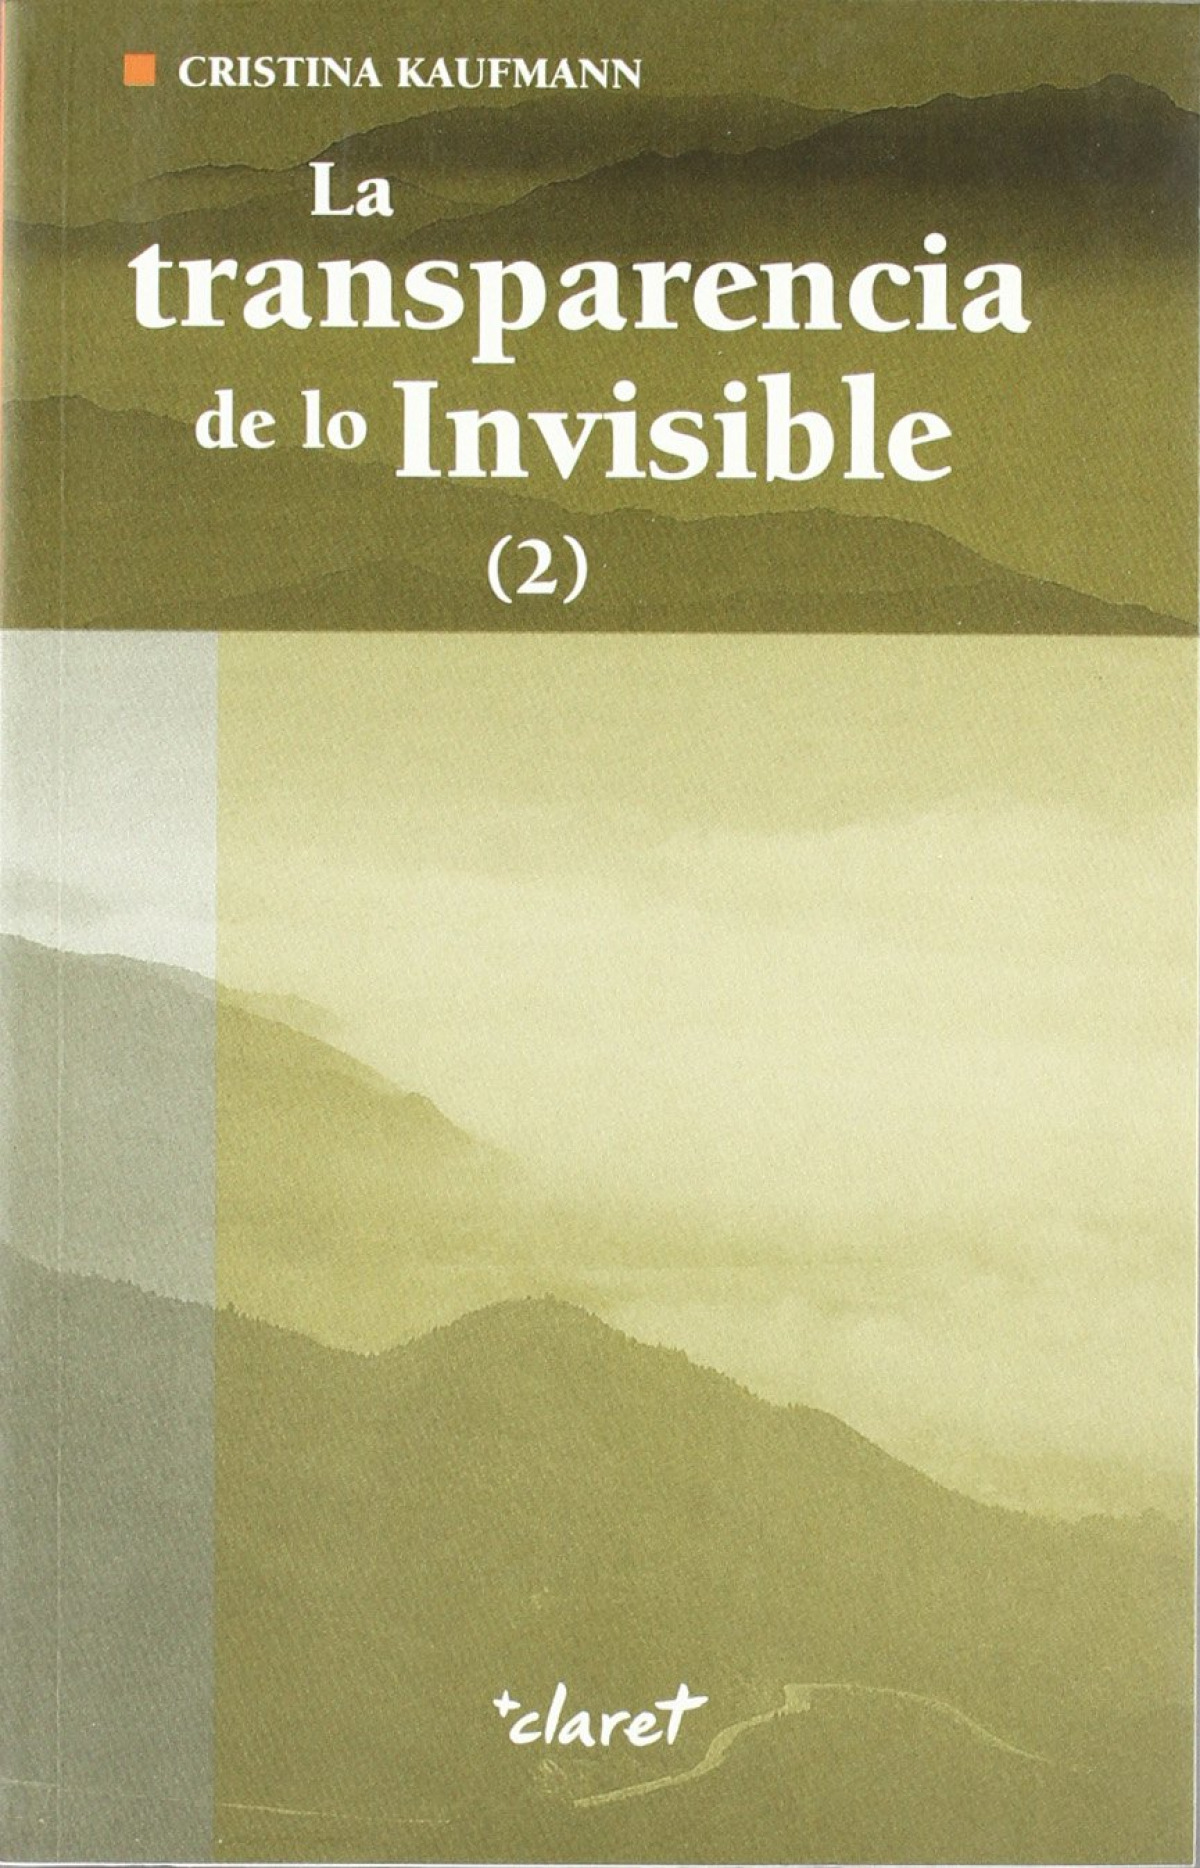 La transparencia de los invisible - Kaufmann, Cristina